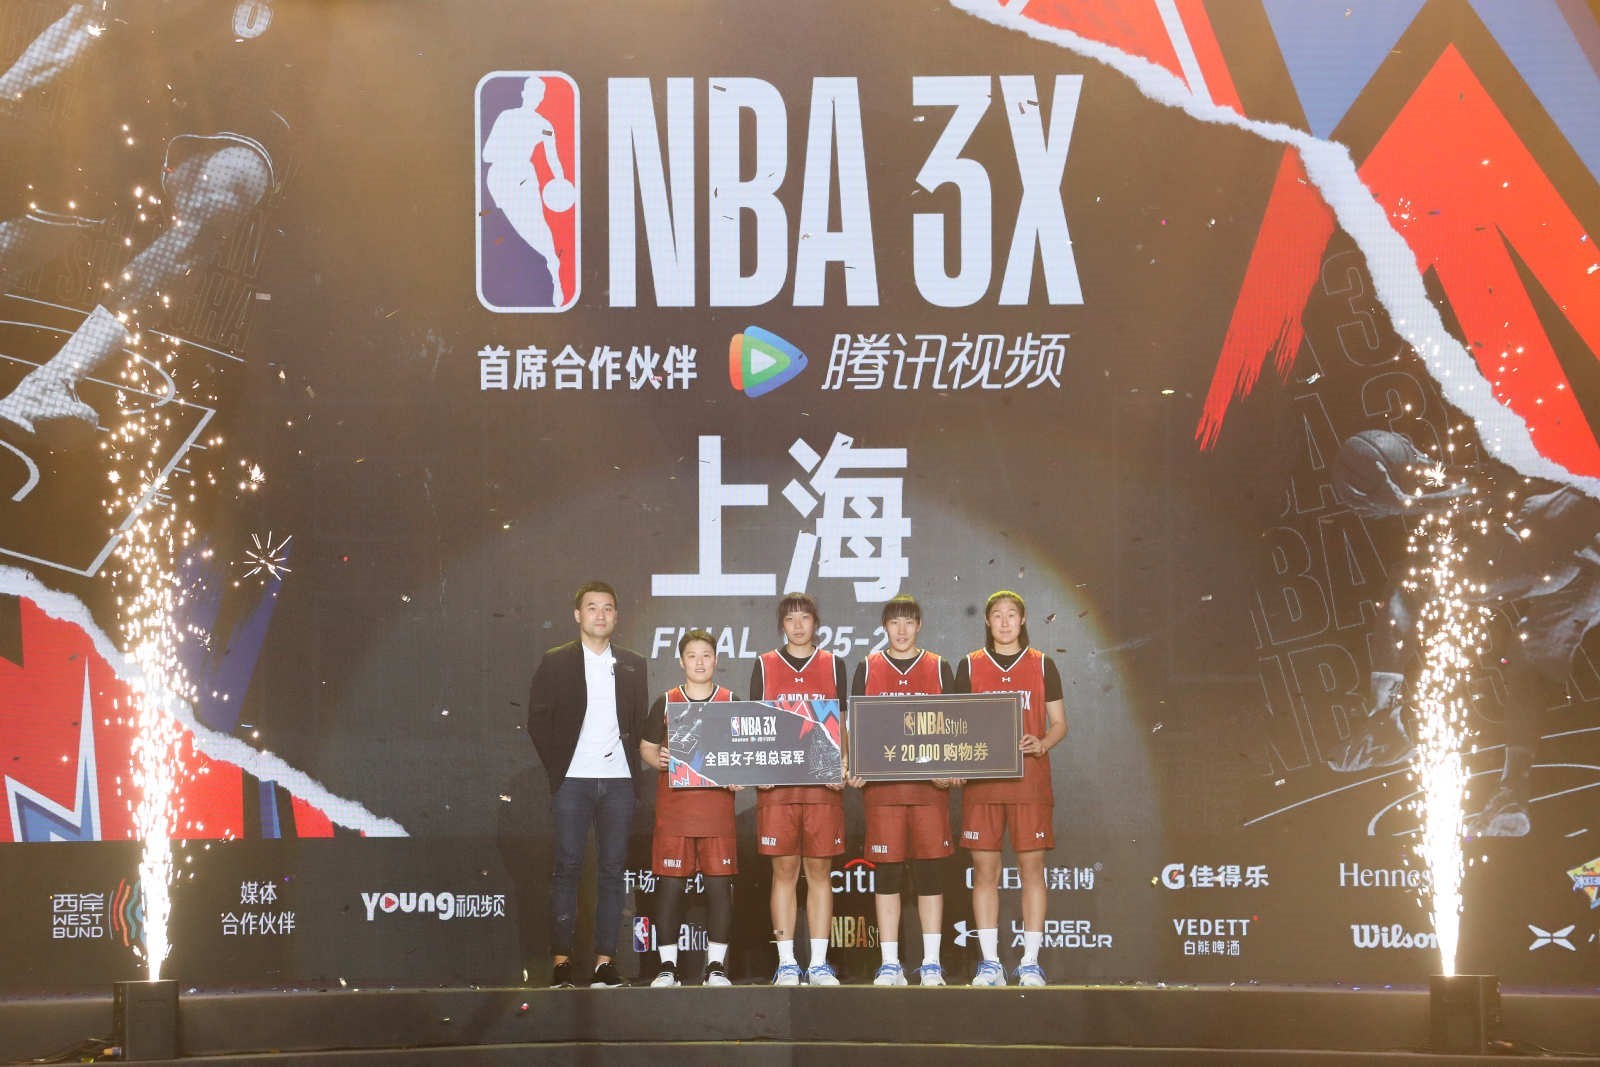 NBA 3X 三人篮球挑战赛全国总决赛落幕